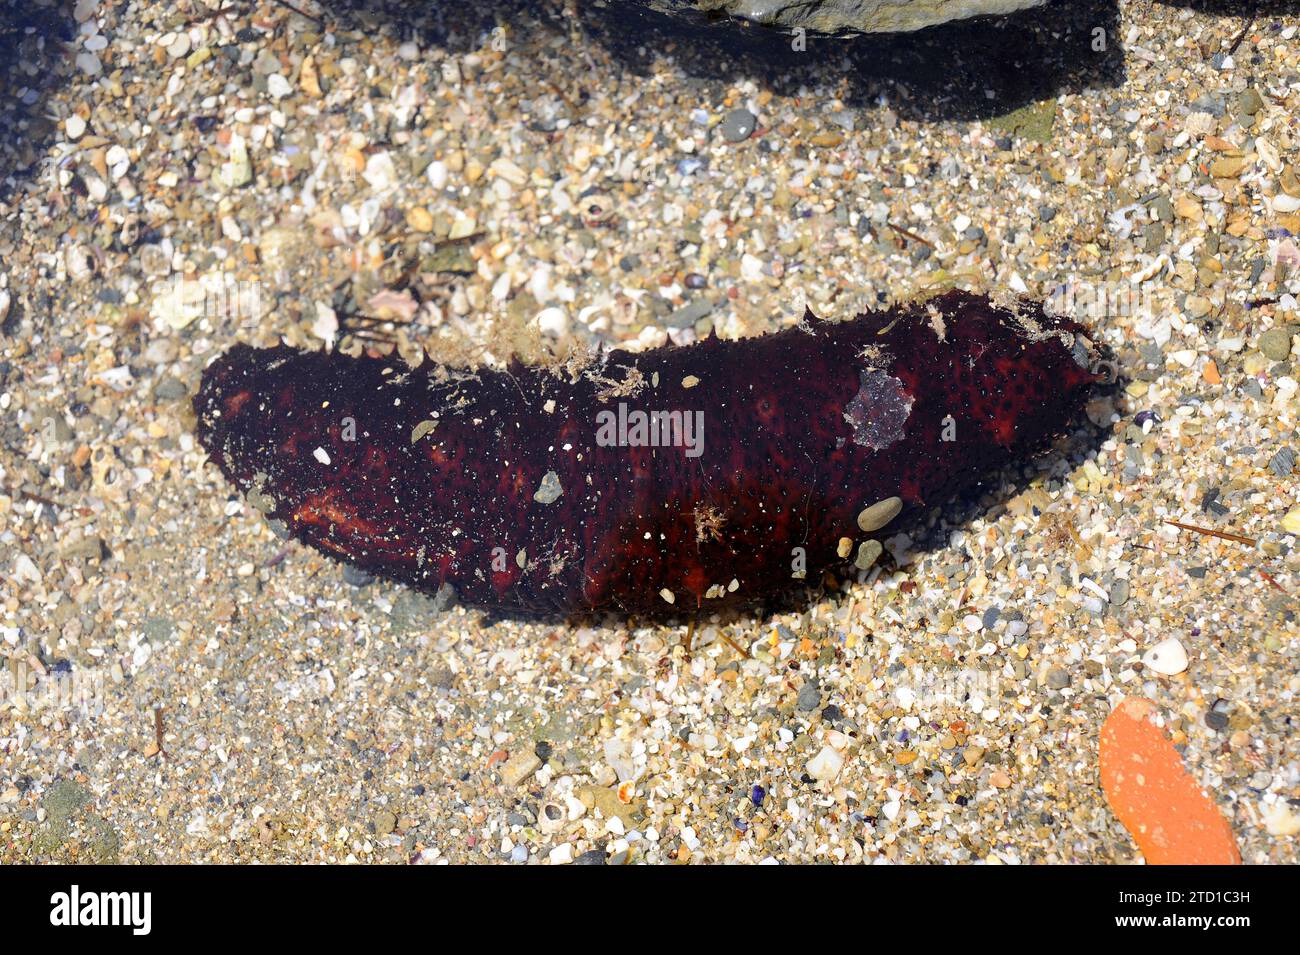 Tubular sea cucumber (Holothuria tubulosa) is a species of sea cucumber feeds on detritus and plankton. This photo was taken in Cap Creus, Girona prov Stock Photo